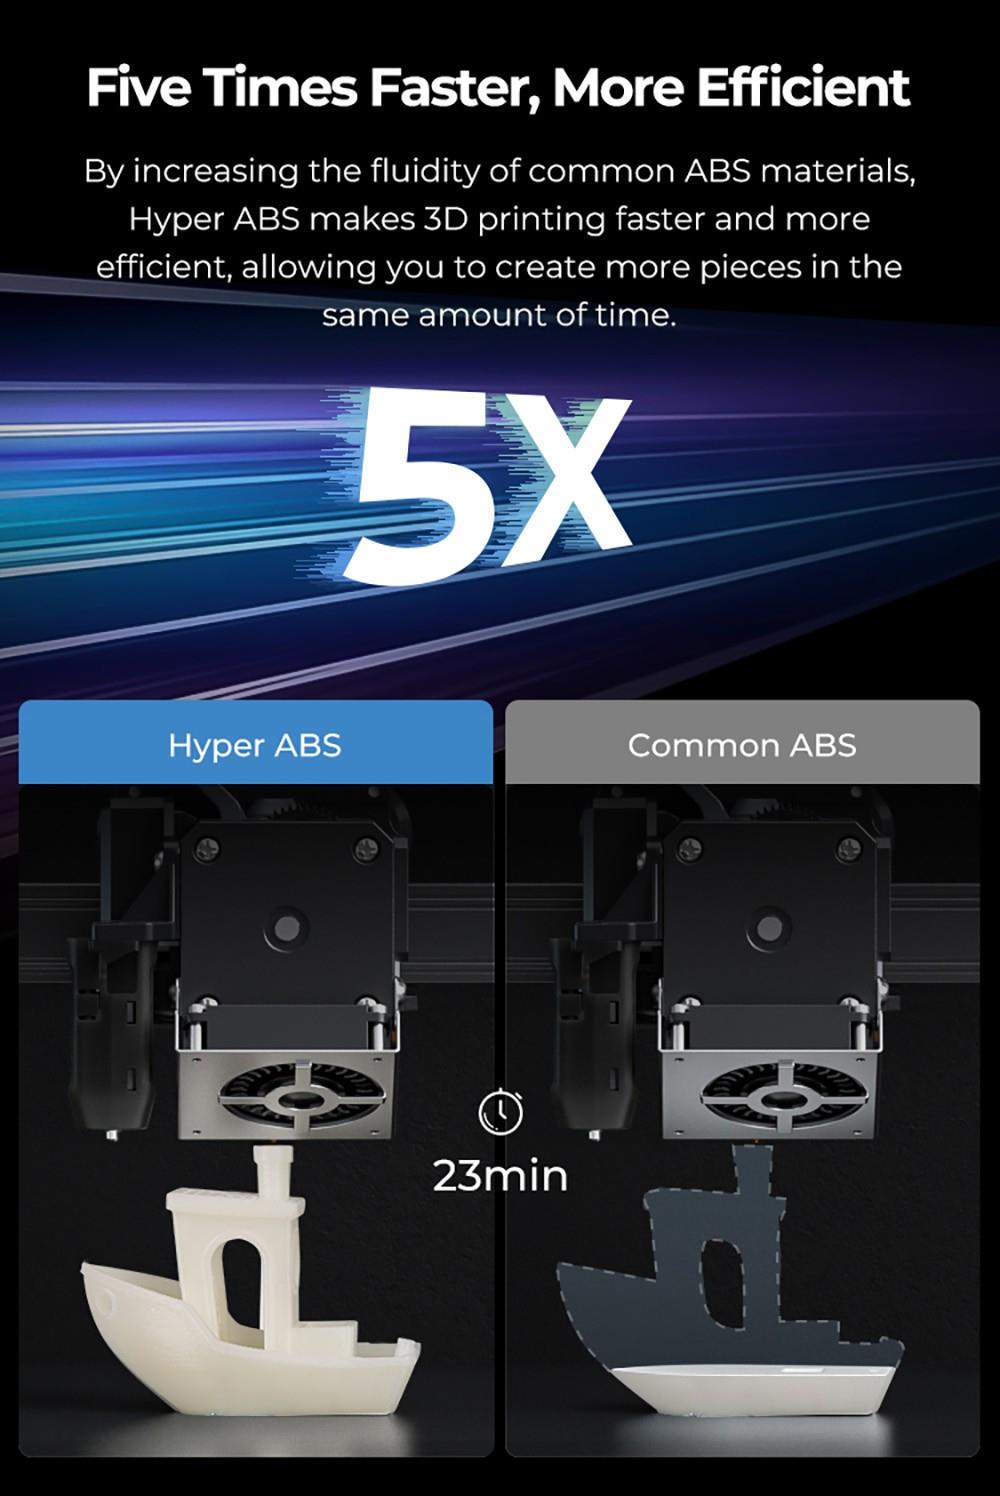 Filamento ABS Creality Hyper Series 1.75 mm 1 kg - bianco